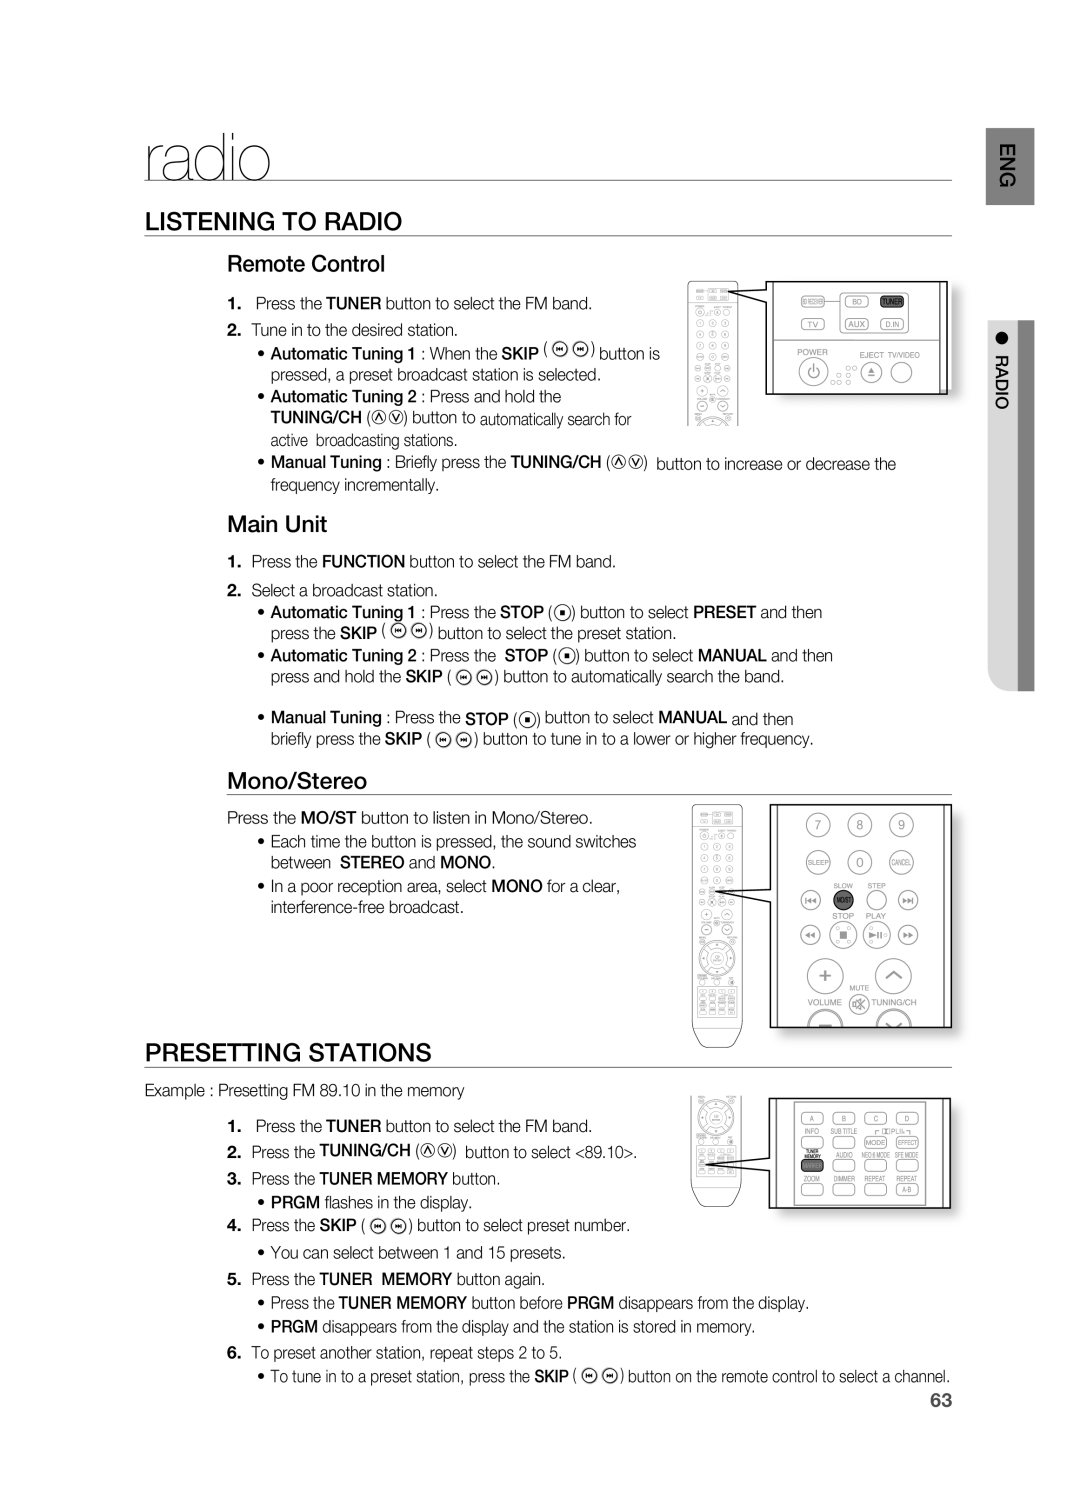 Samsung AH68-02019S manual radio, LISTEnIng TO RADIO, PRESETTIng STATIOnS, Remote Control, Main Unit, Mono/Stereo 